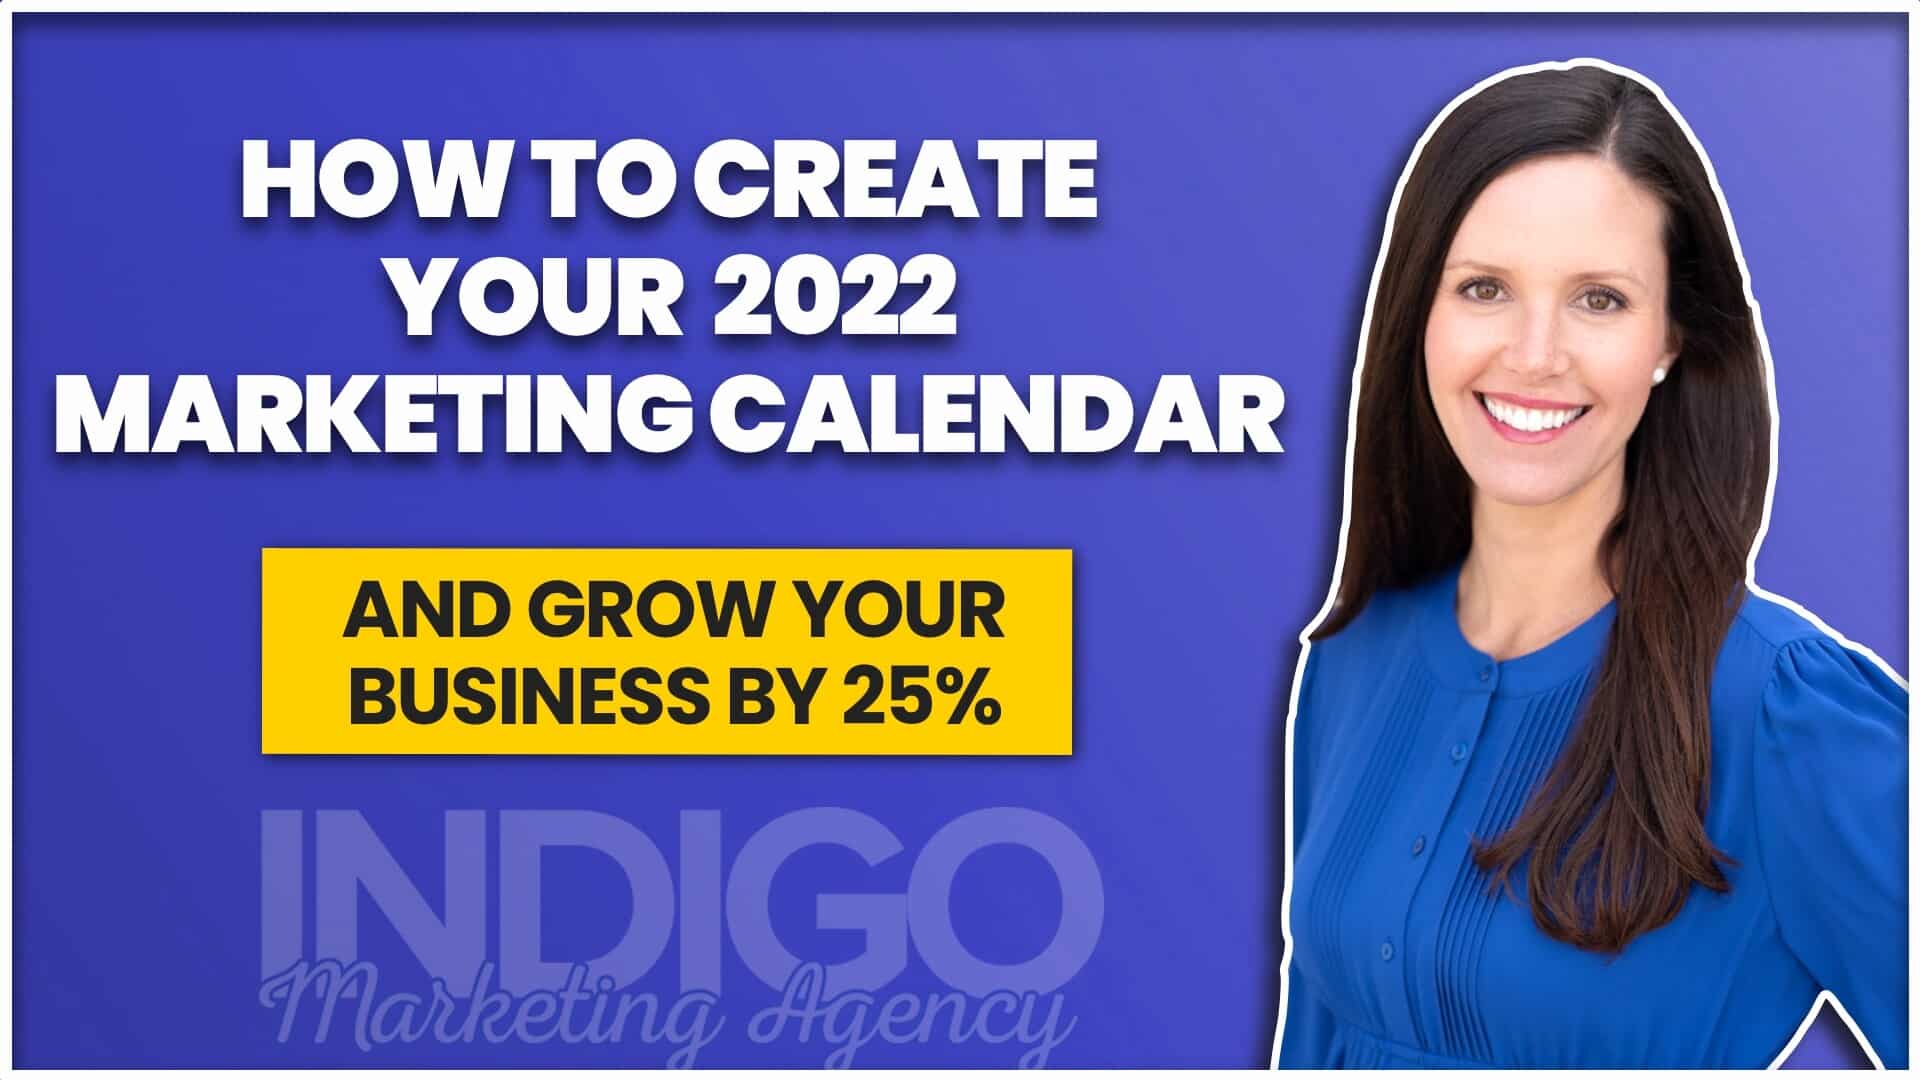 How to create your 2022 Marketing Calendar - Indigo Marketing Agency - Marketing for Financial Advisors